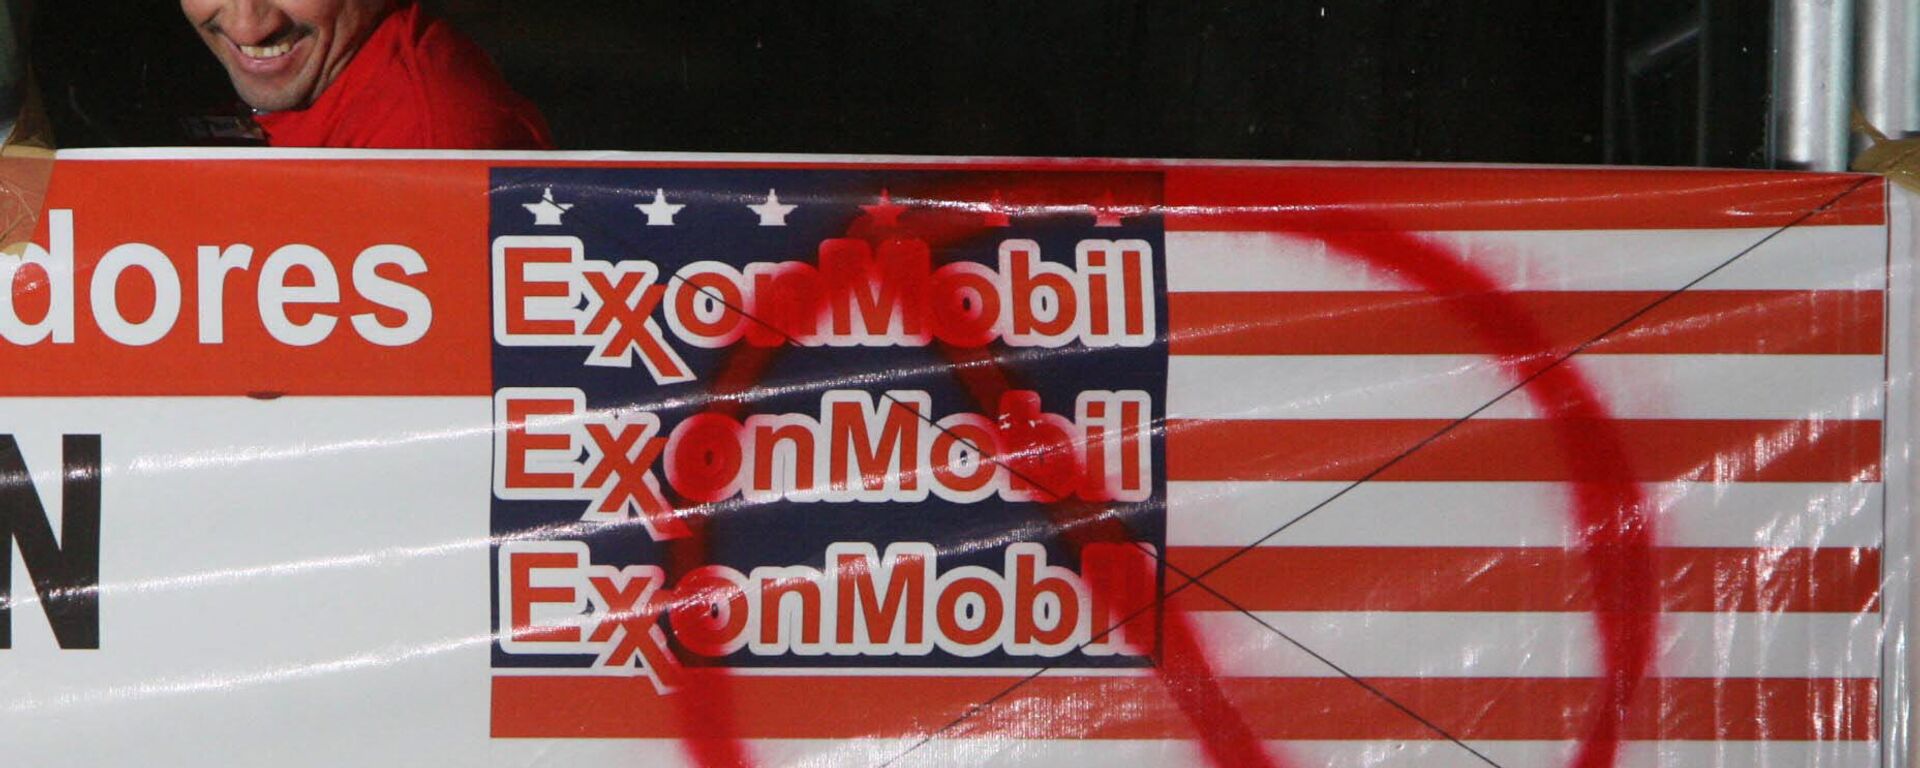 Protesta contra Exxon Mobil en Venezuela - Sputnik Mundo, 1920, 02.03.2021